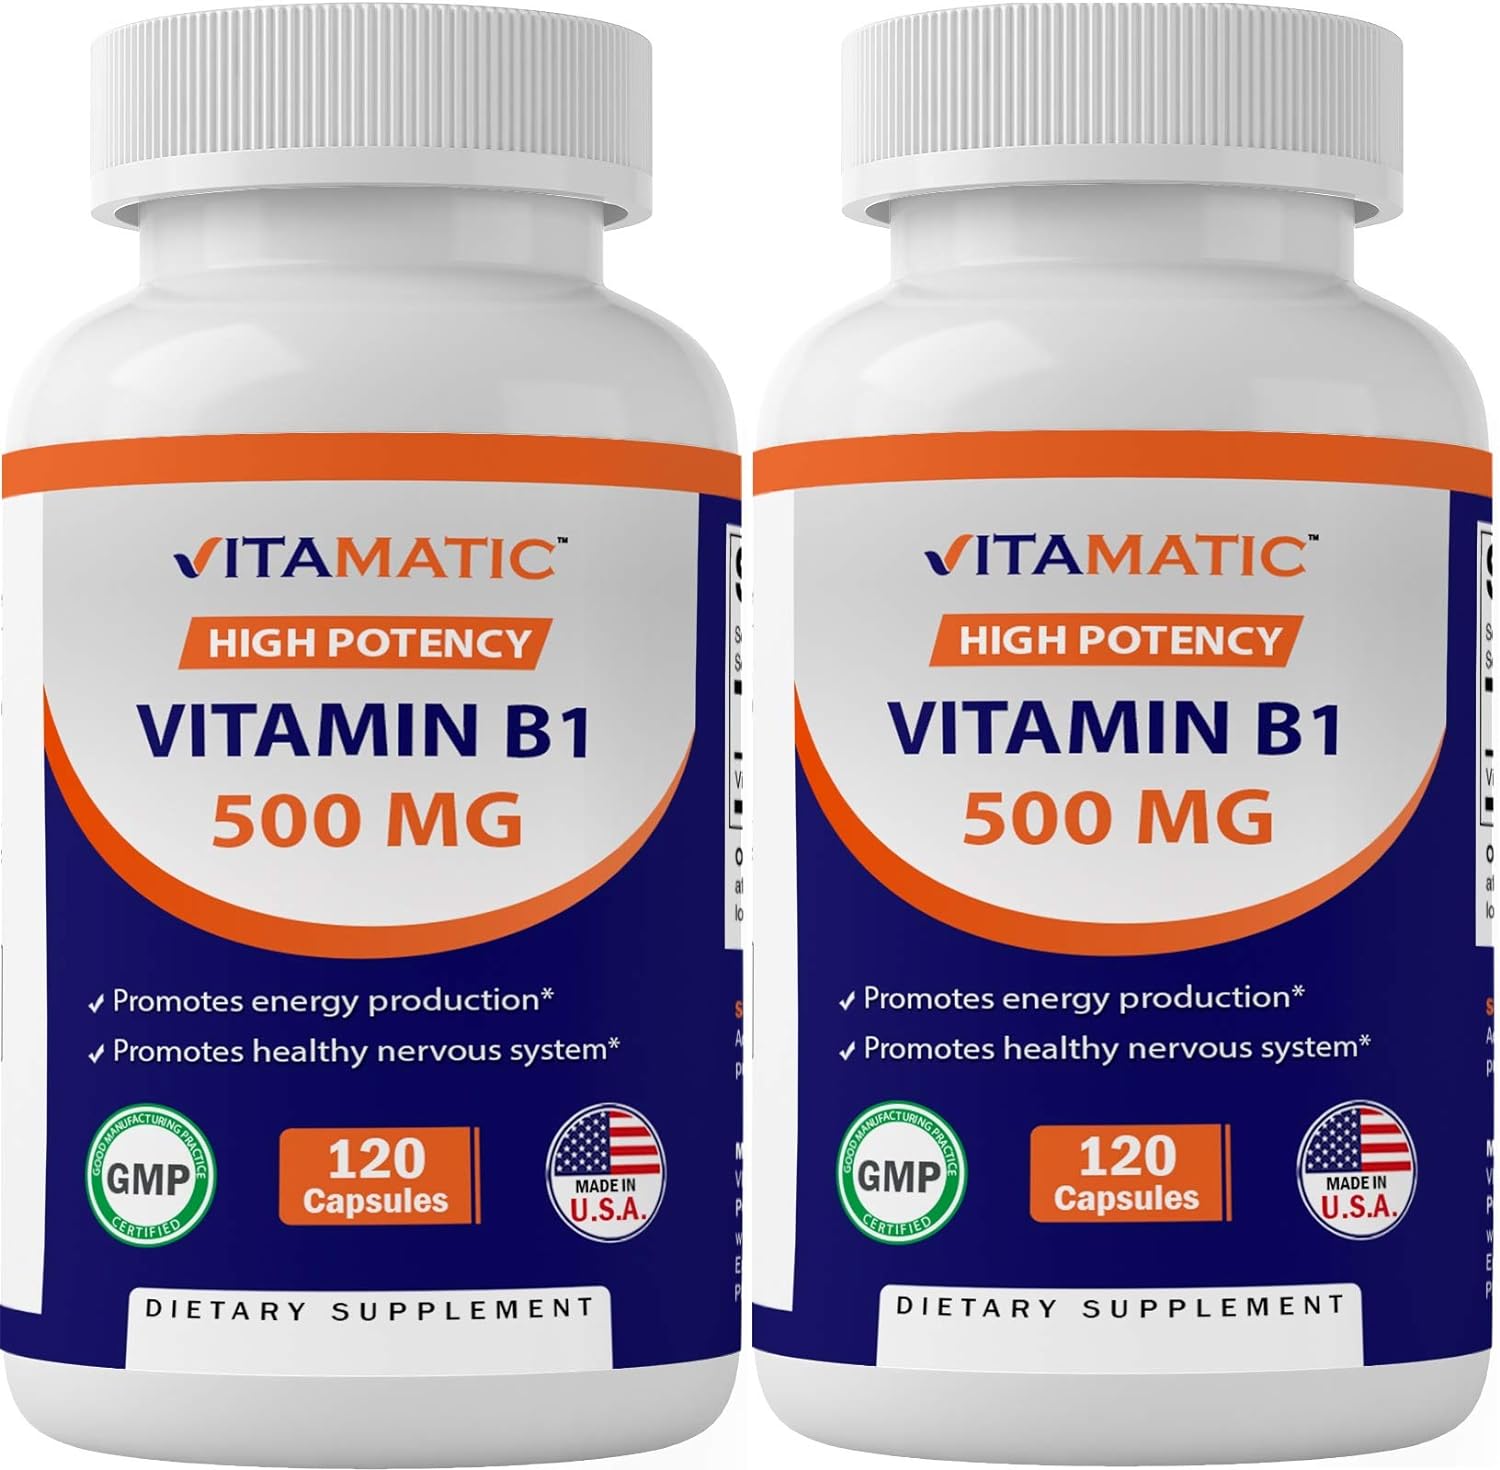 Vitamatic 2 Pack Vitamin B1 (Thiamine) 500mg, 120 Capsules